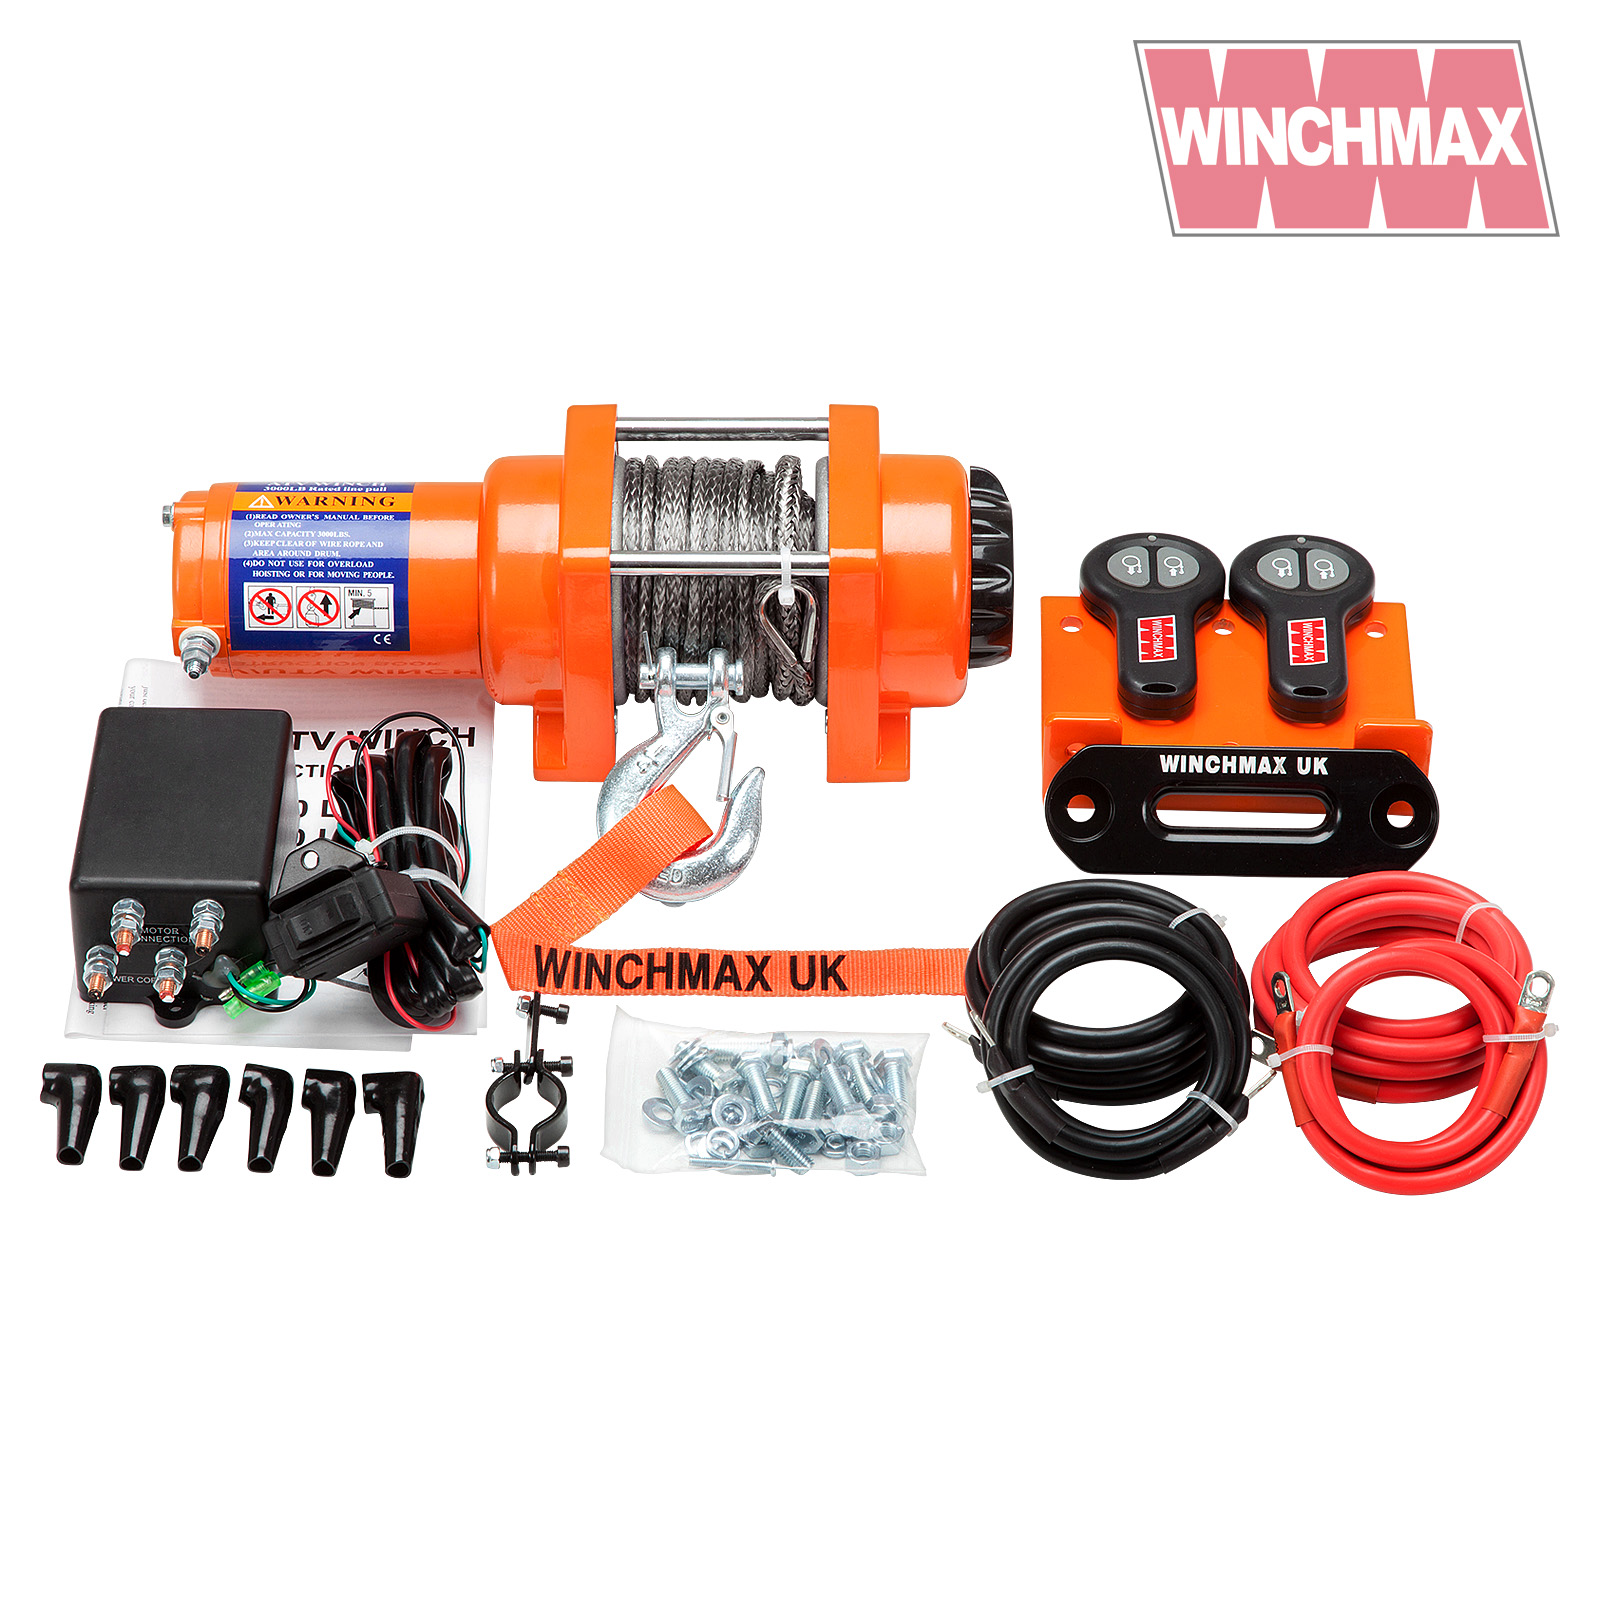 Winchmax 3000lb 12v Winch. Dyneema Rope and Remote Controls